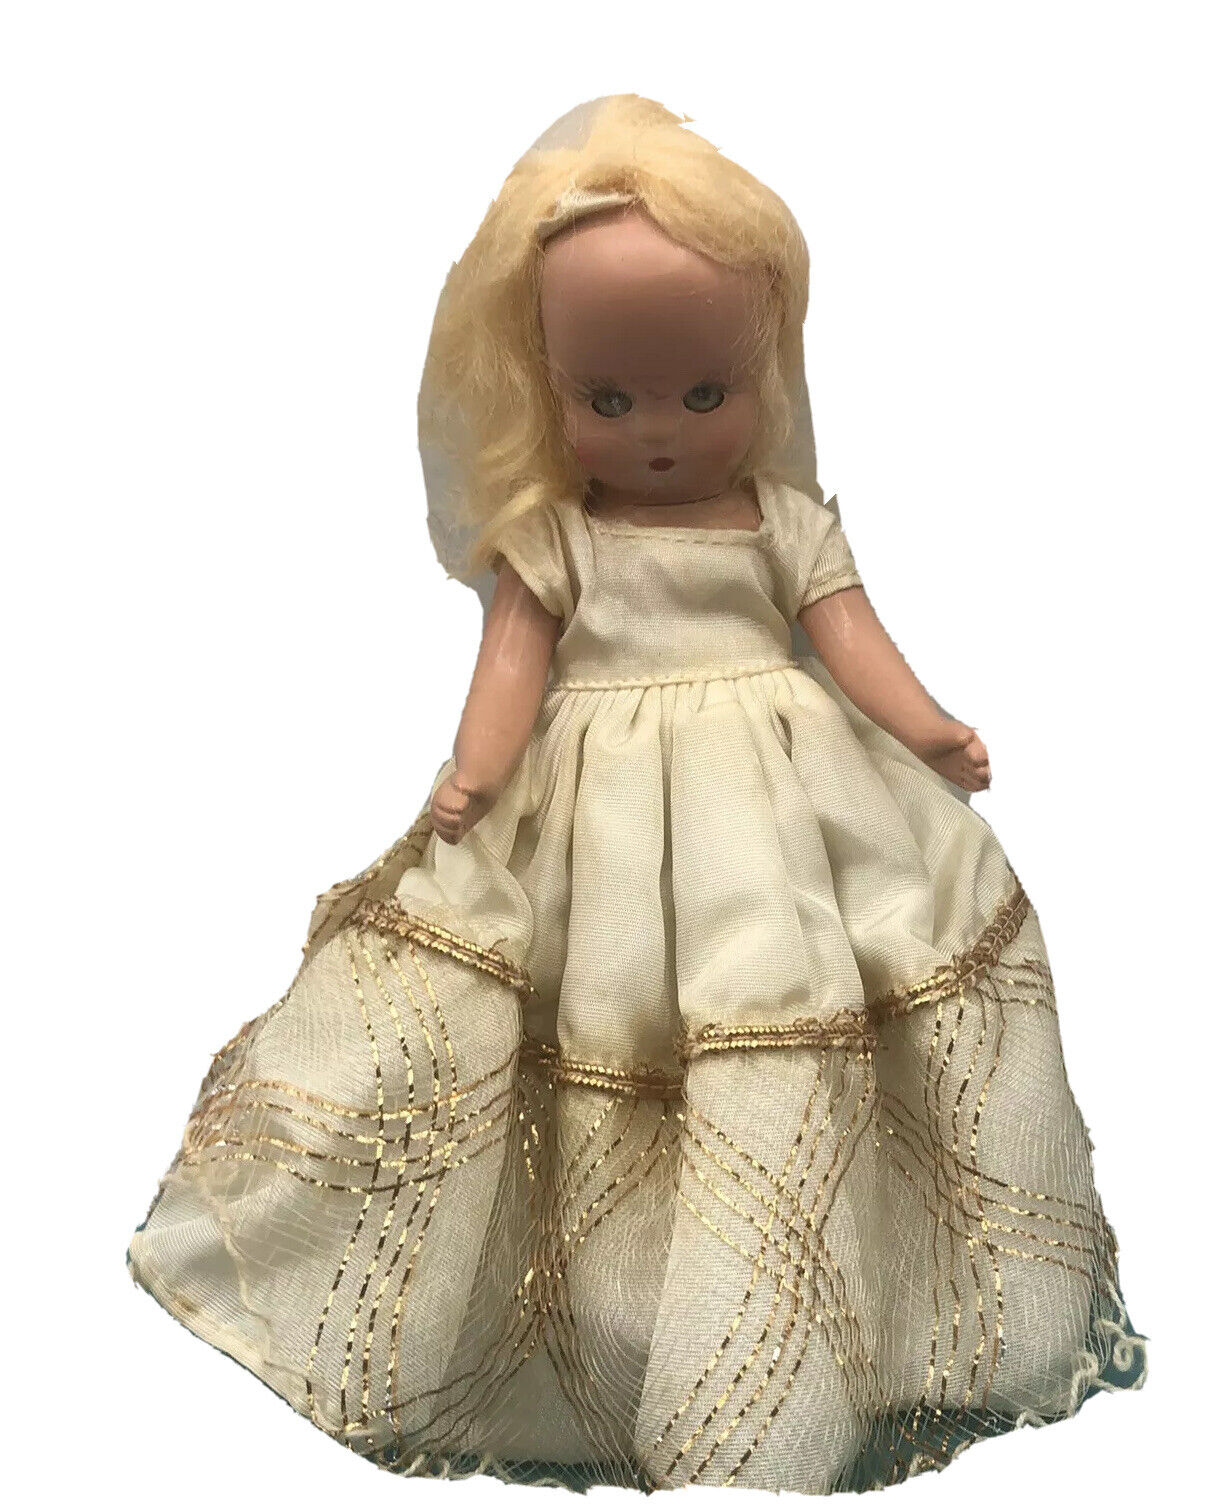 Vintage Storybook Doll Blonde With Needs Tlc Fun